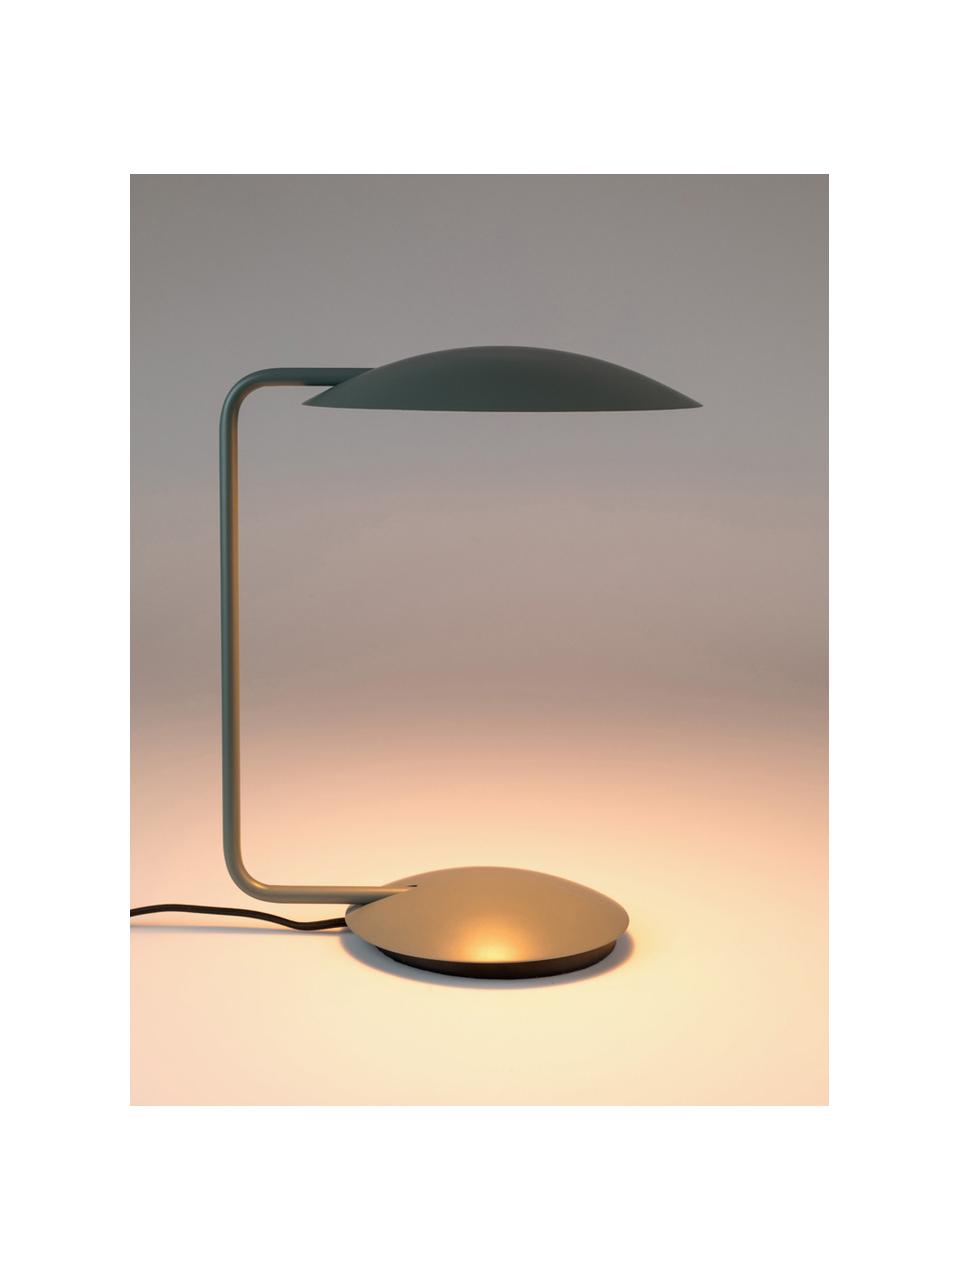 Tischlampe Pixie, Lampenschirm: Metall, pulverbeschichtet, Lampenfuß: Metall, pulverbeschichtet, Grau, B 25 x H 39 cm